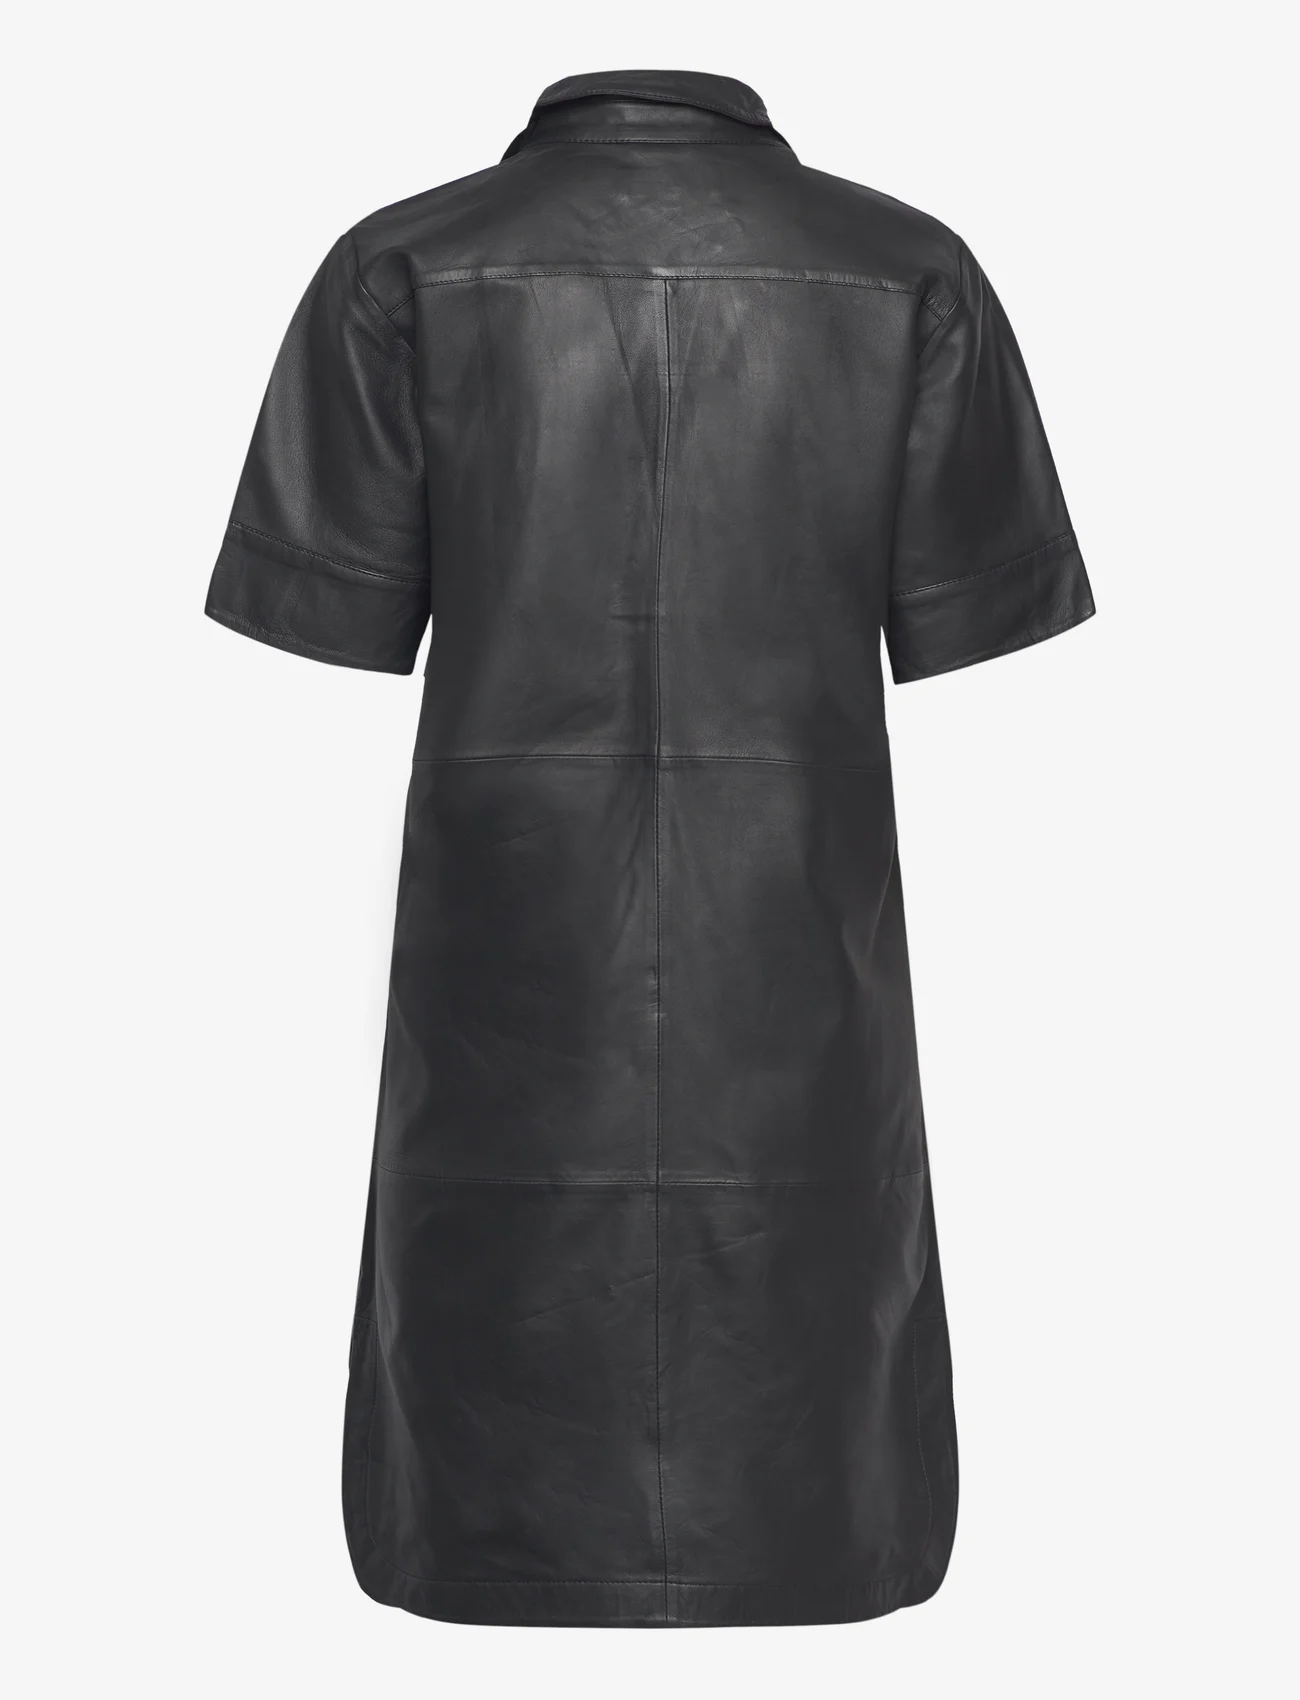 Rosemunde - Leather dress - t-paitamekot - black - 1